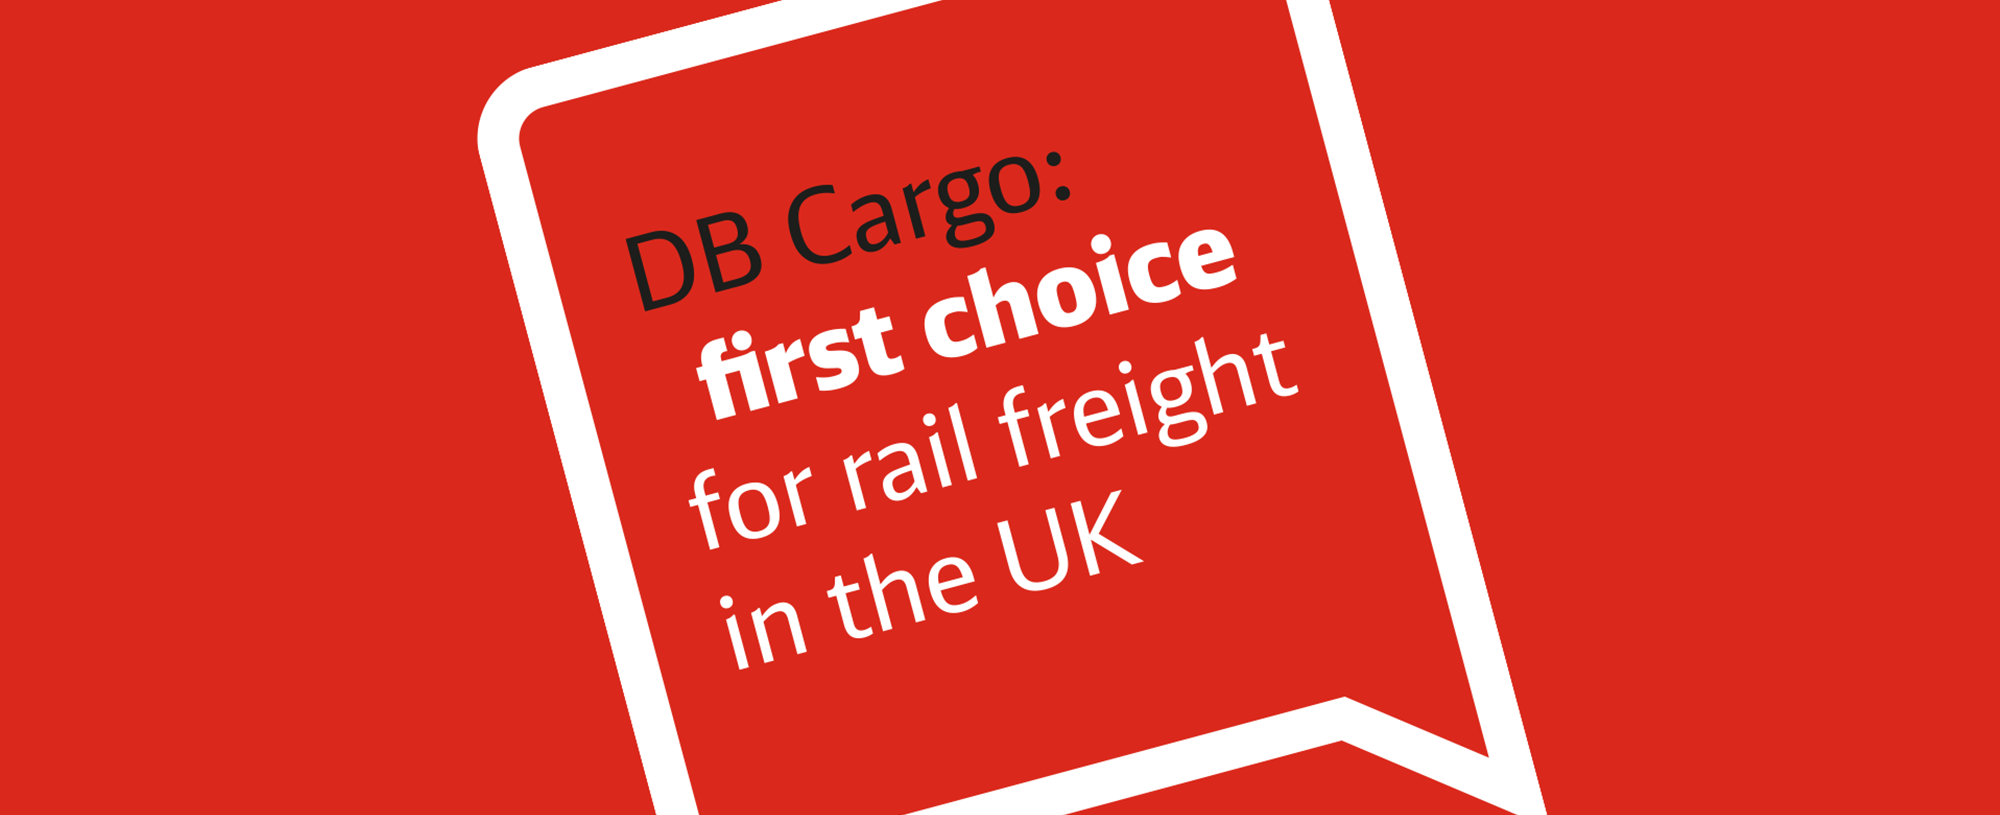 DB Cargo Internal Communications 